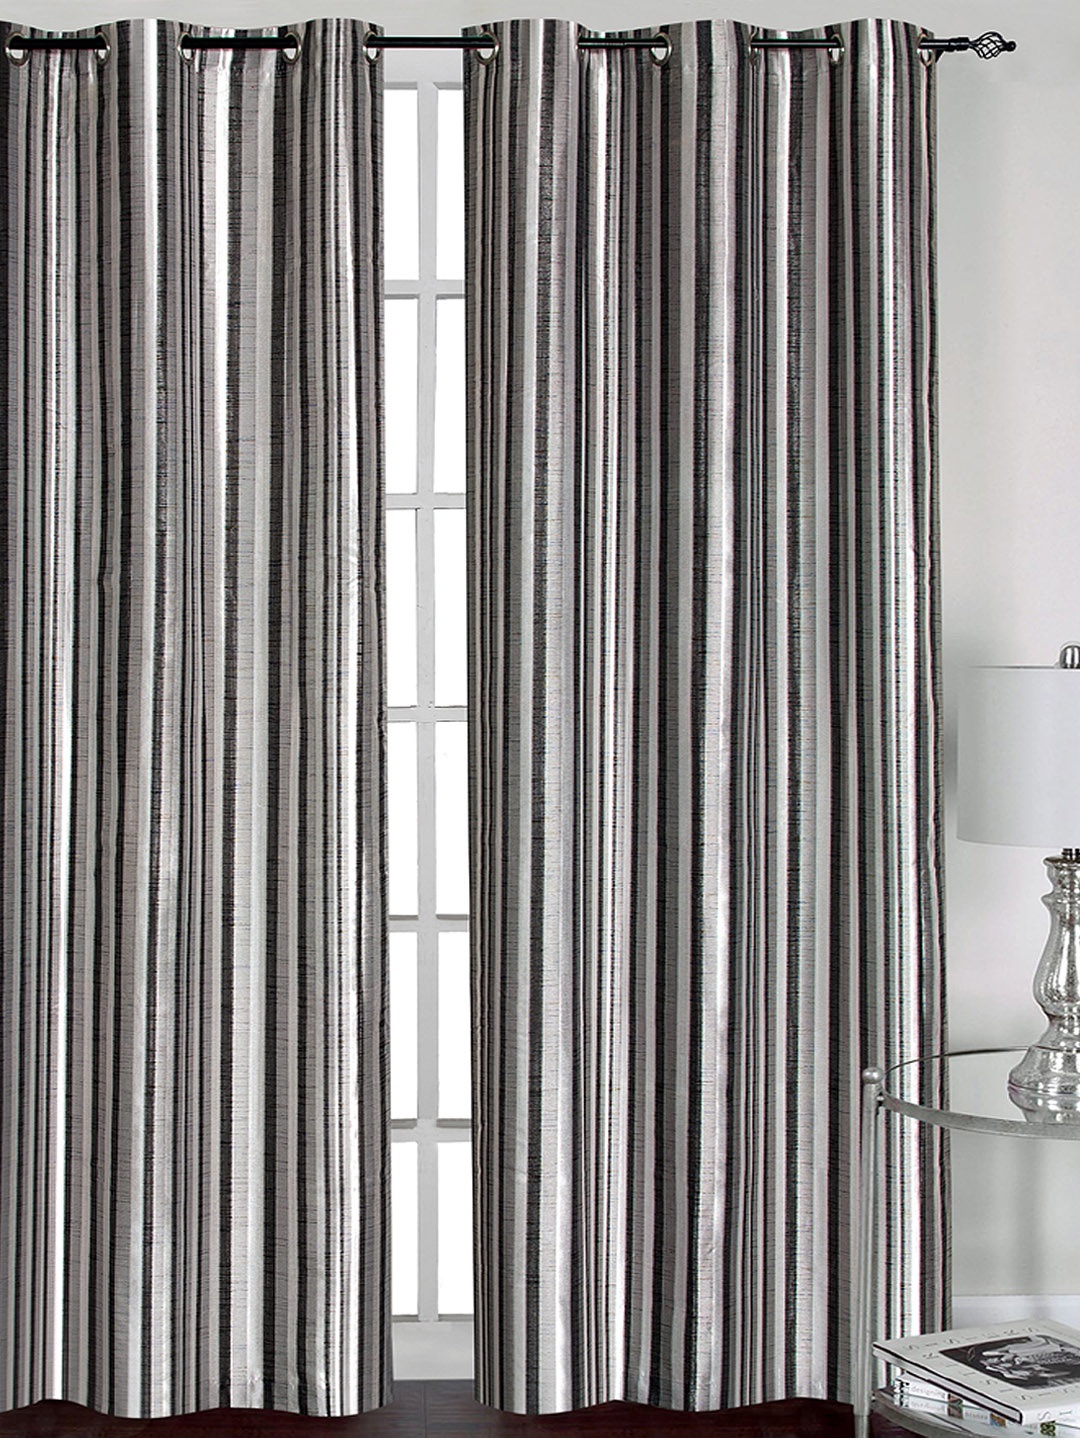 

Deco Window Grey & Black Set of Single Door Curtains